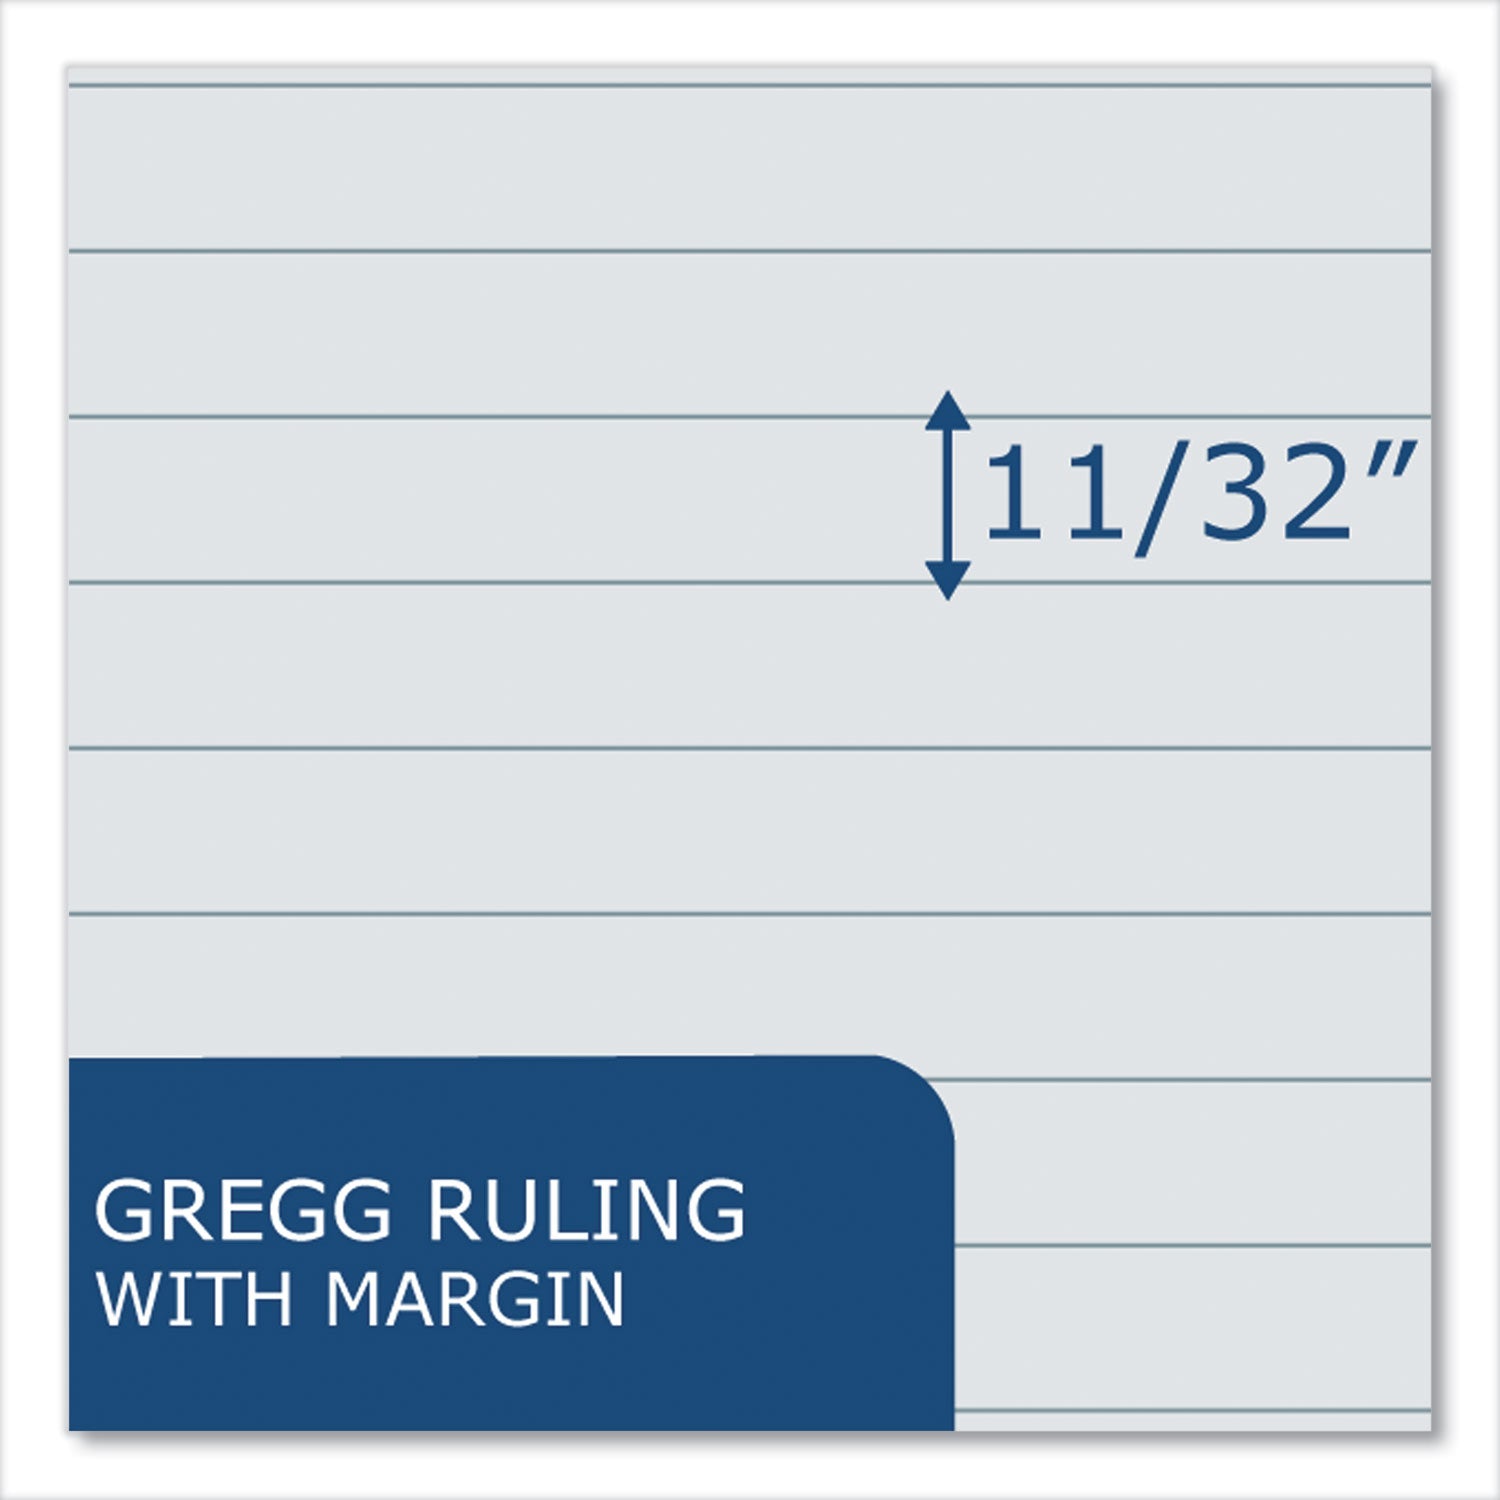 Enviroshades Steno Notepad, Gregg Rule, White Cover, 80 Gray 6 x 9 Sheets, 4/Pack - 